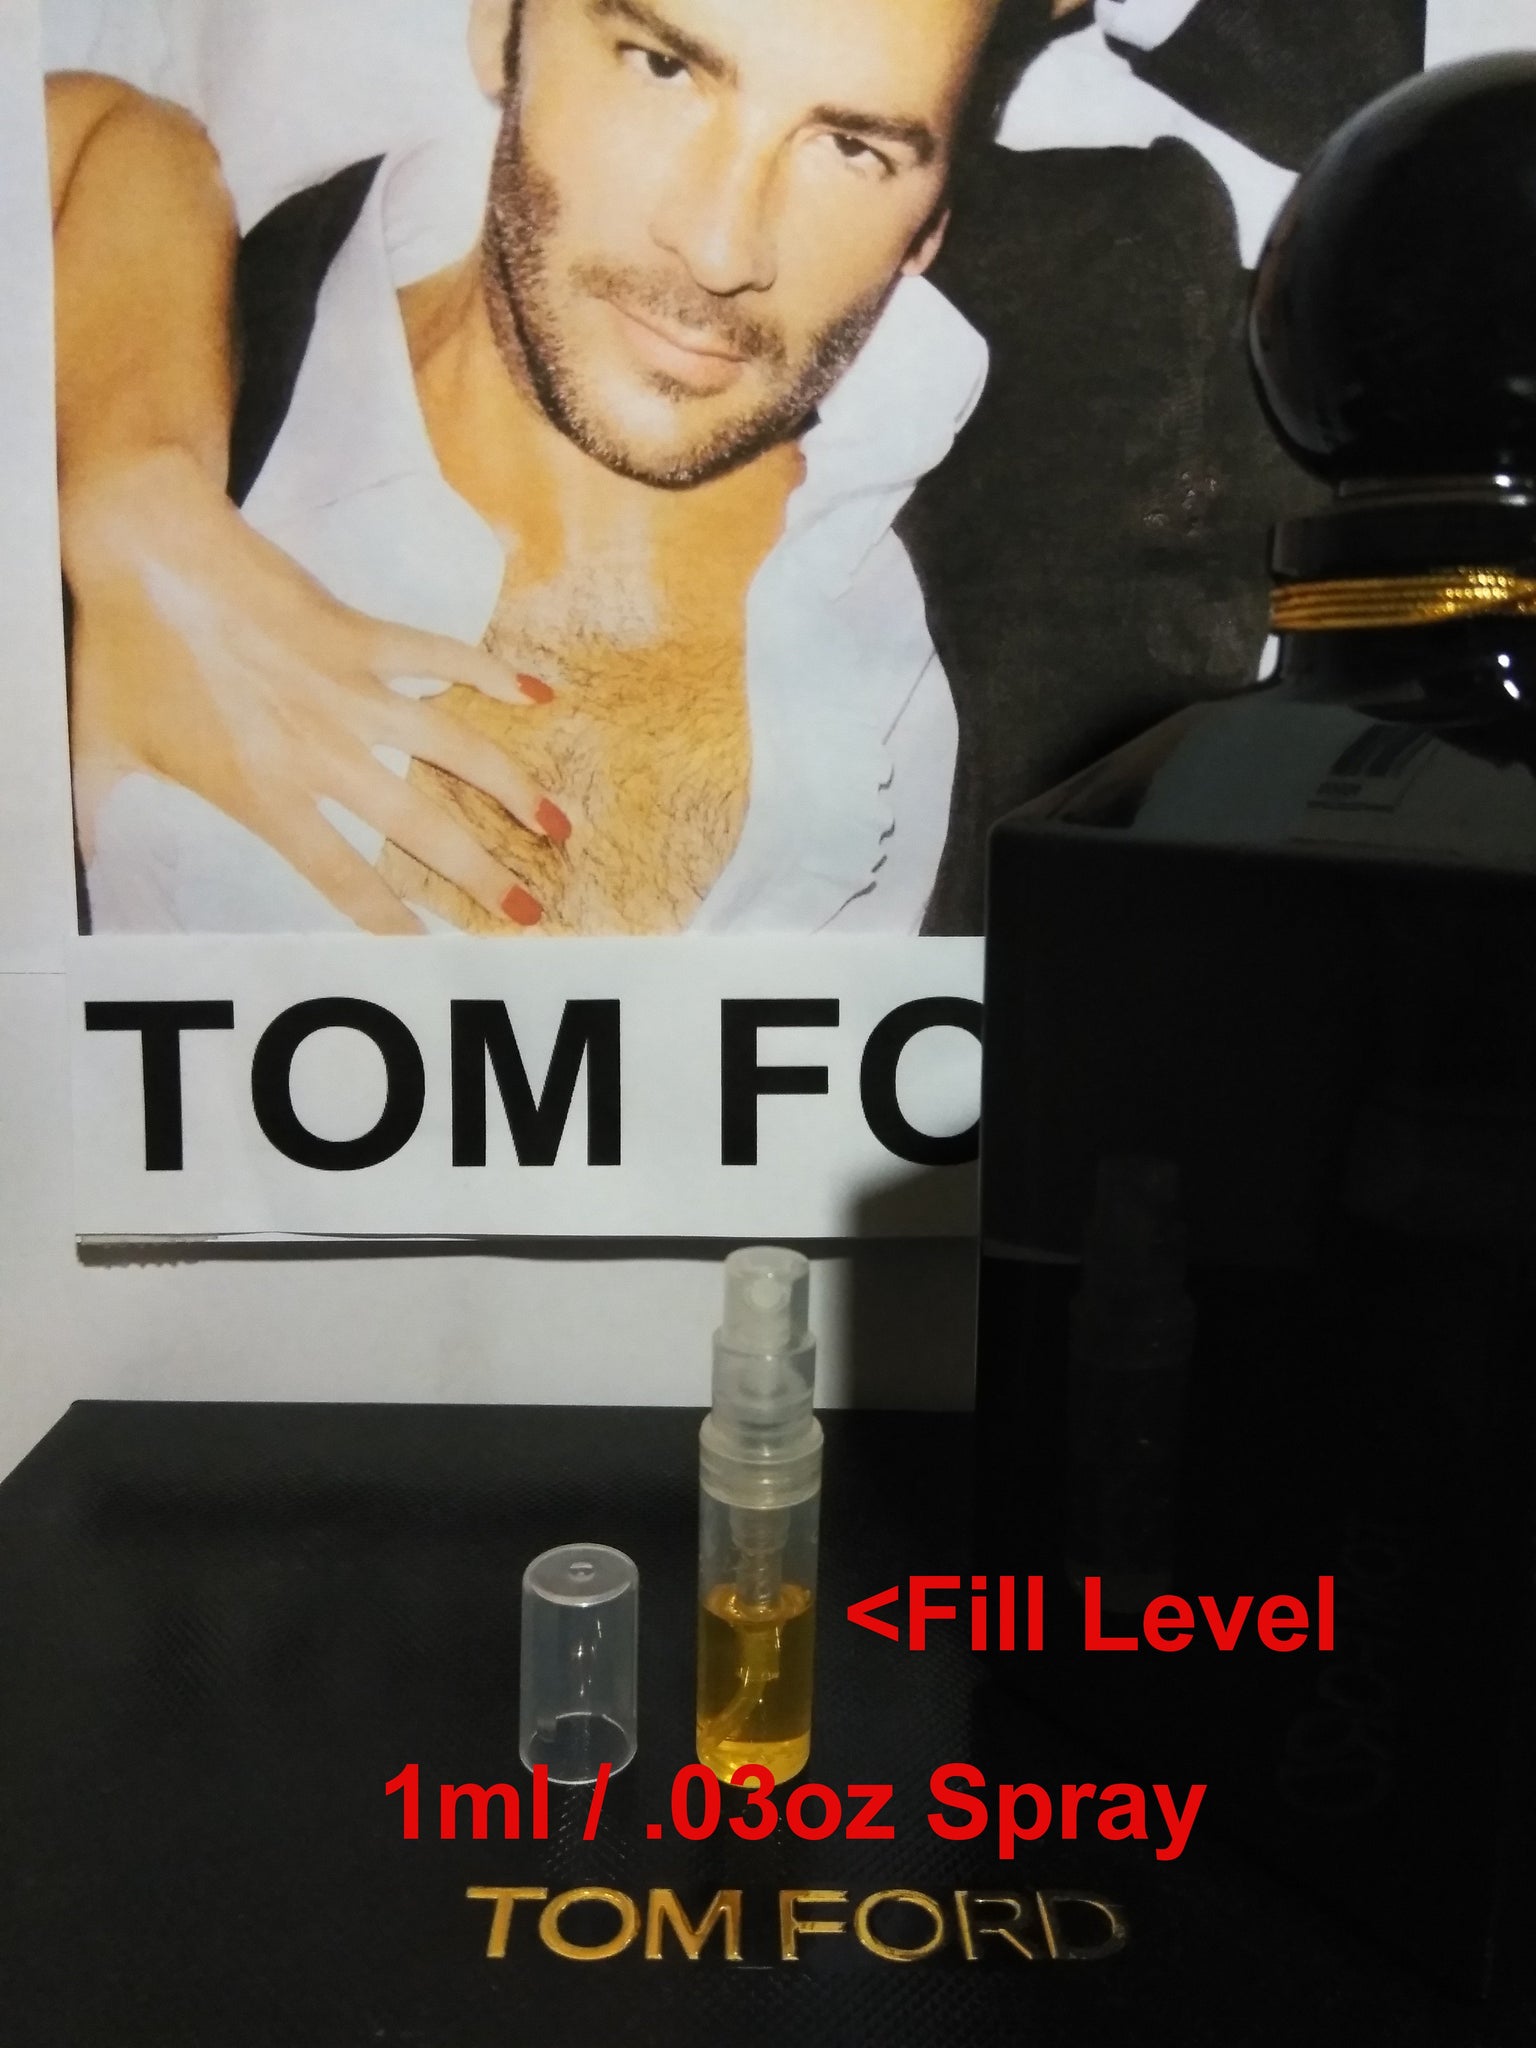 OUD Wood Intense Authentic Tom Ford Perfume Samples – TomFordPerfumeSamples